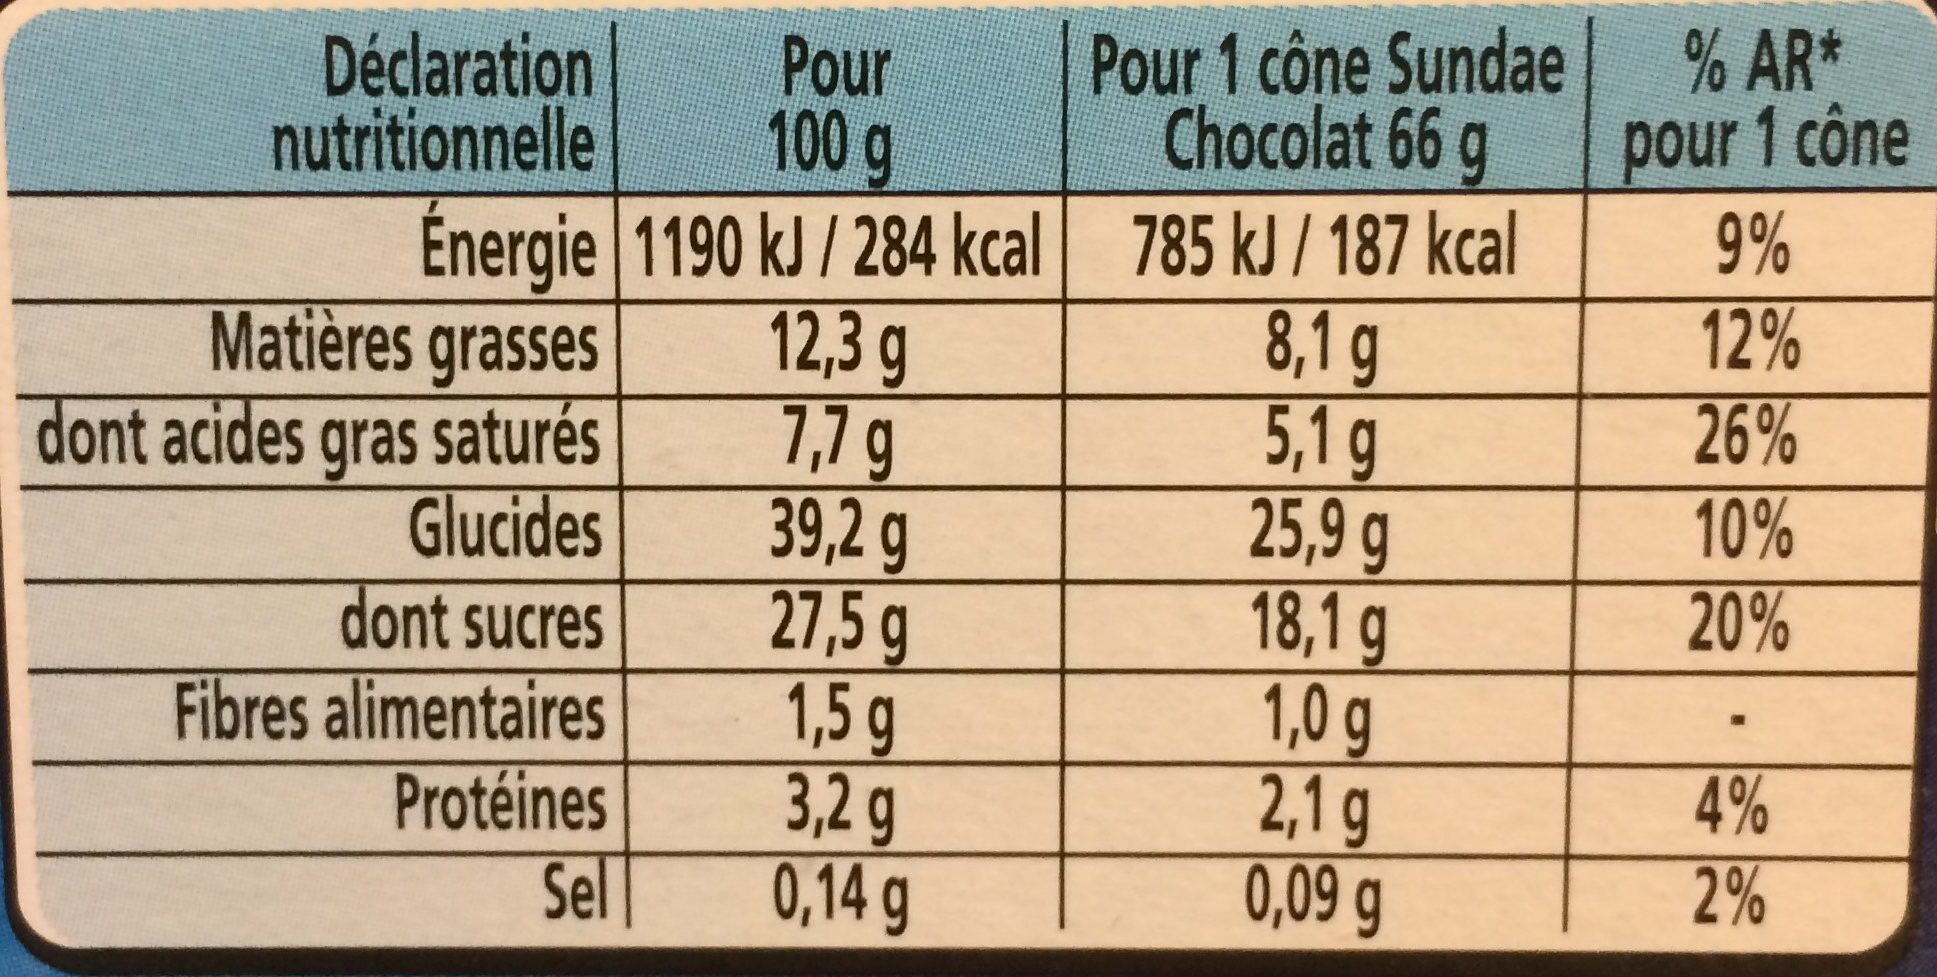 Extreme Cone Sundae Choco - Nutrition facts - fr